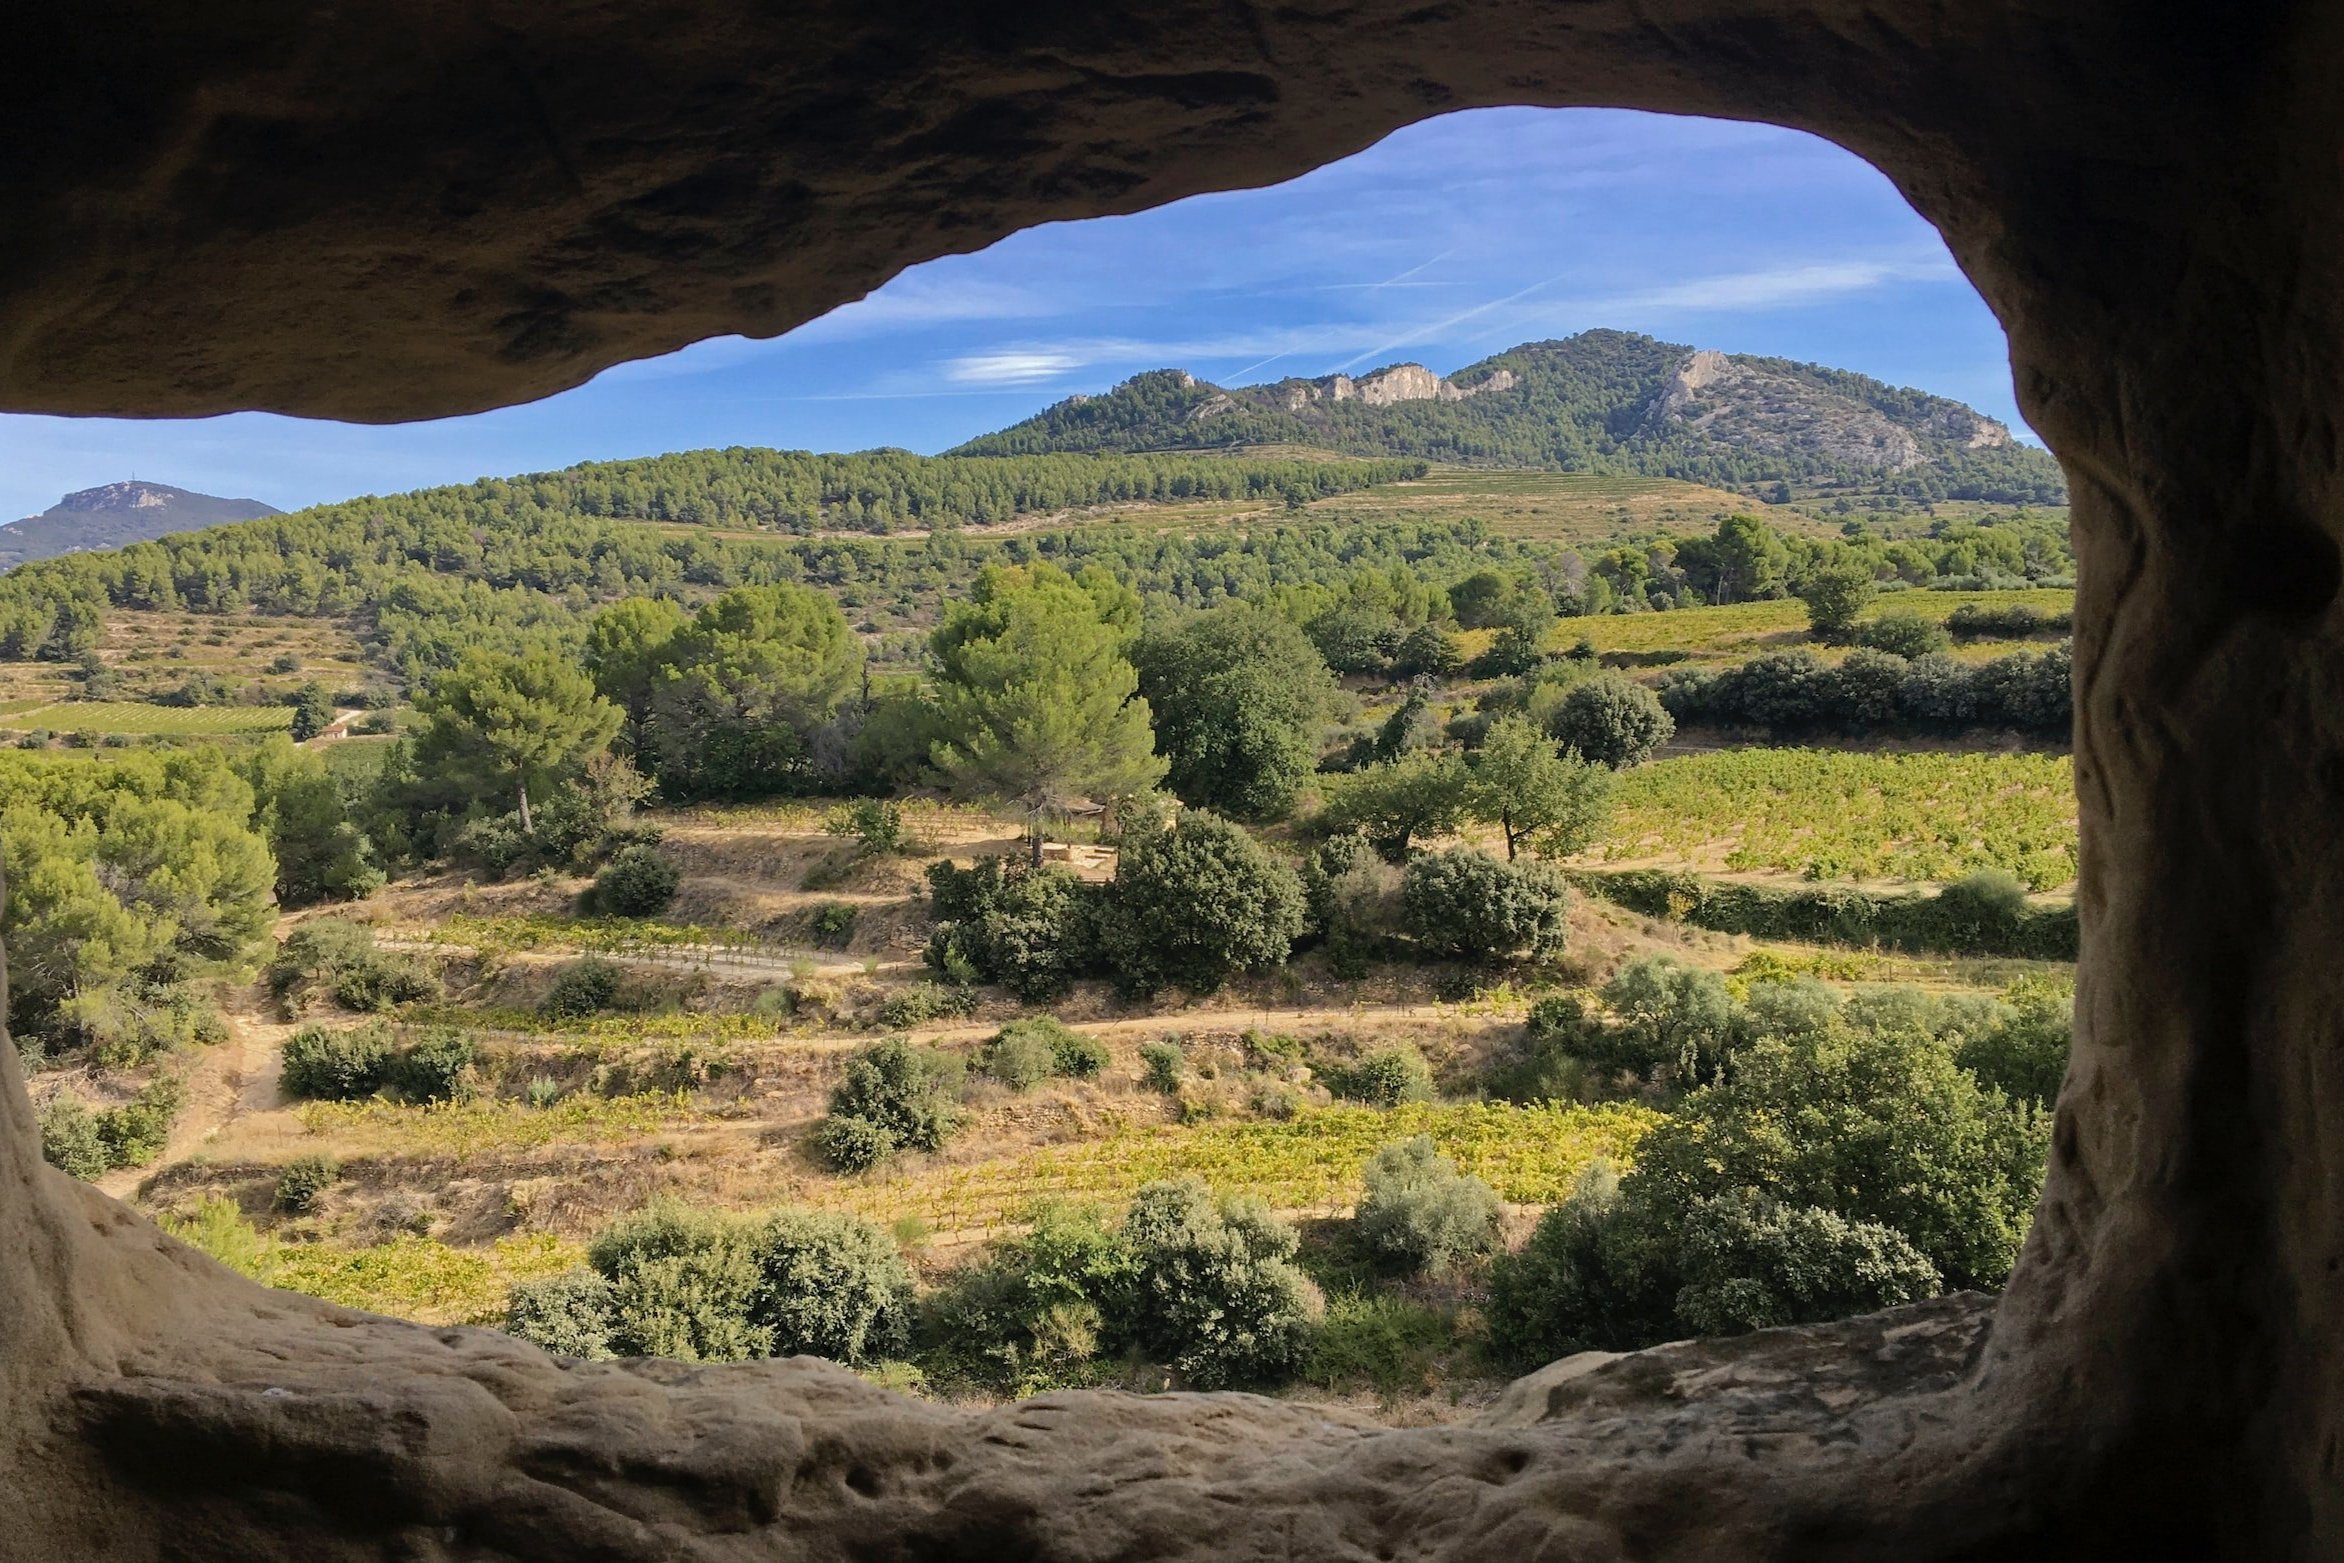 Hiking among the Luberon vineyards and mountains